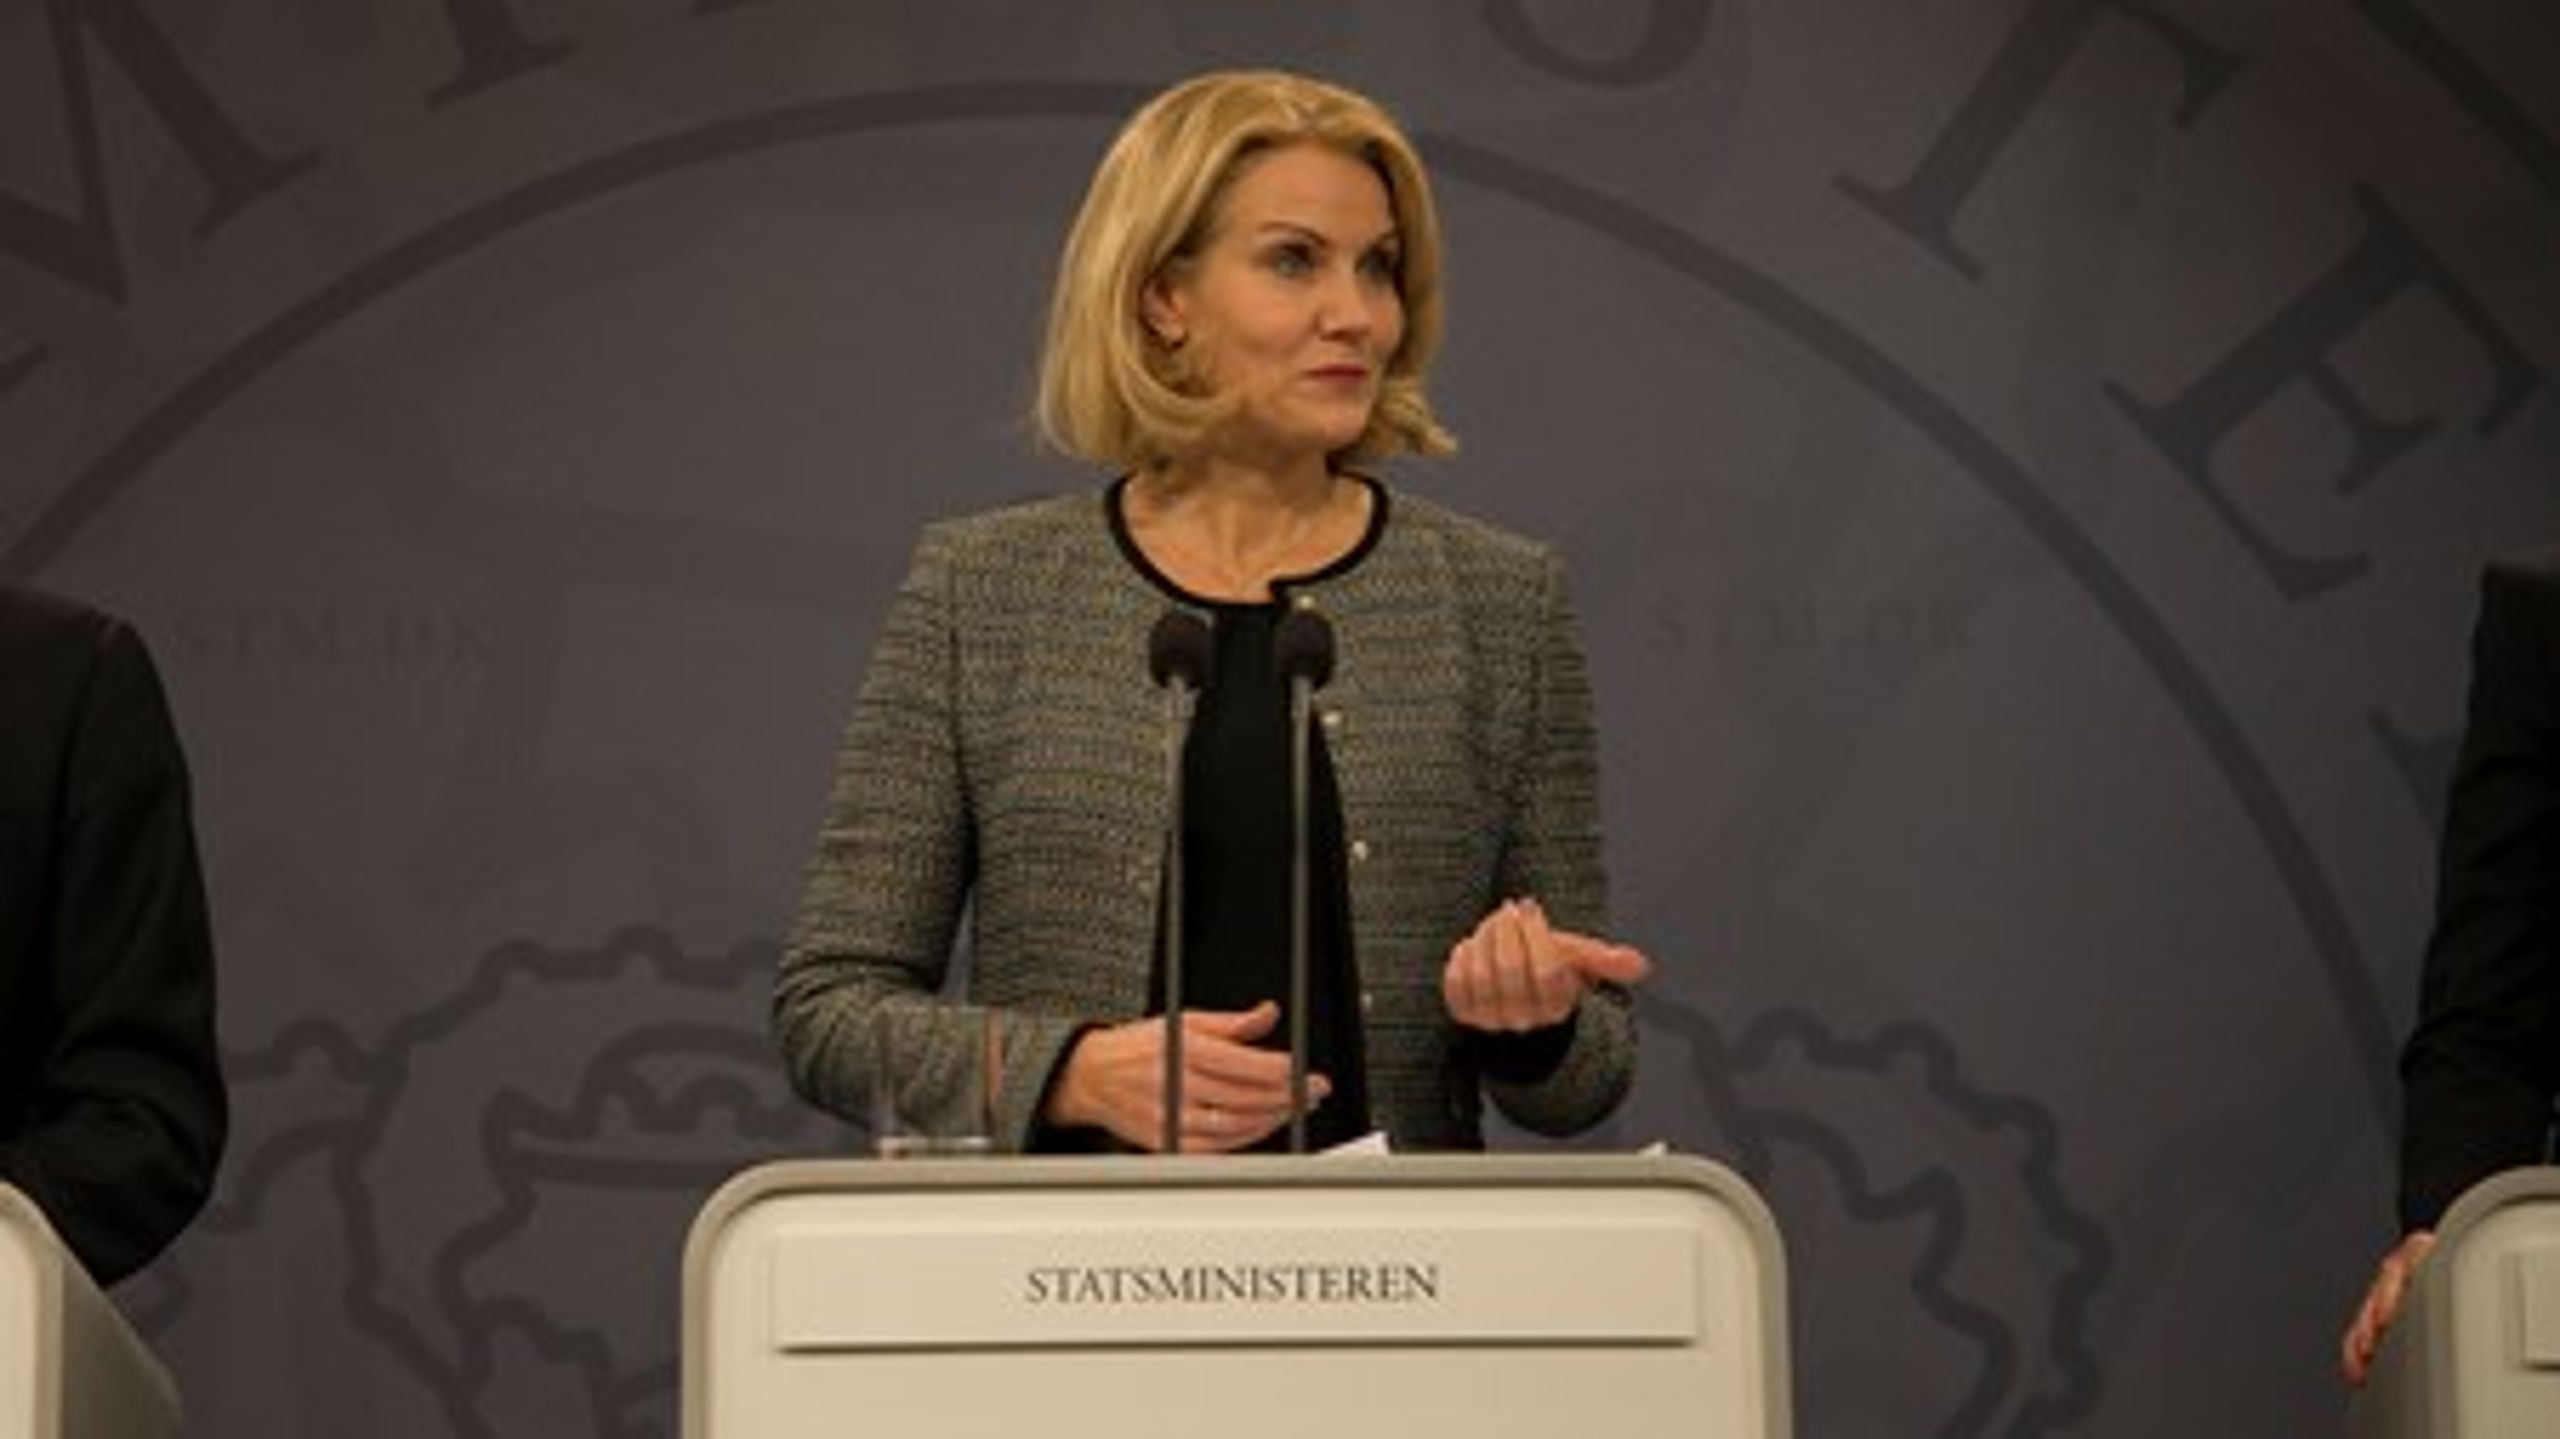 Statsminister Helle Thorning-Schmidt (S) fremlægger 12 tiltag mod terror